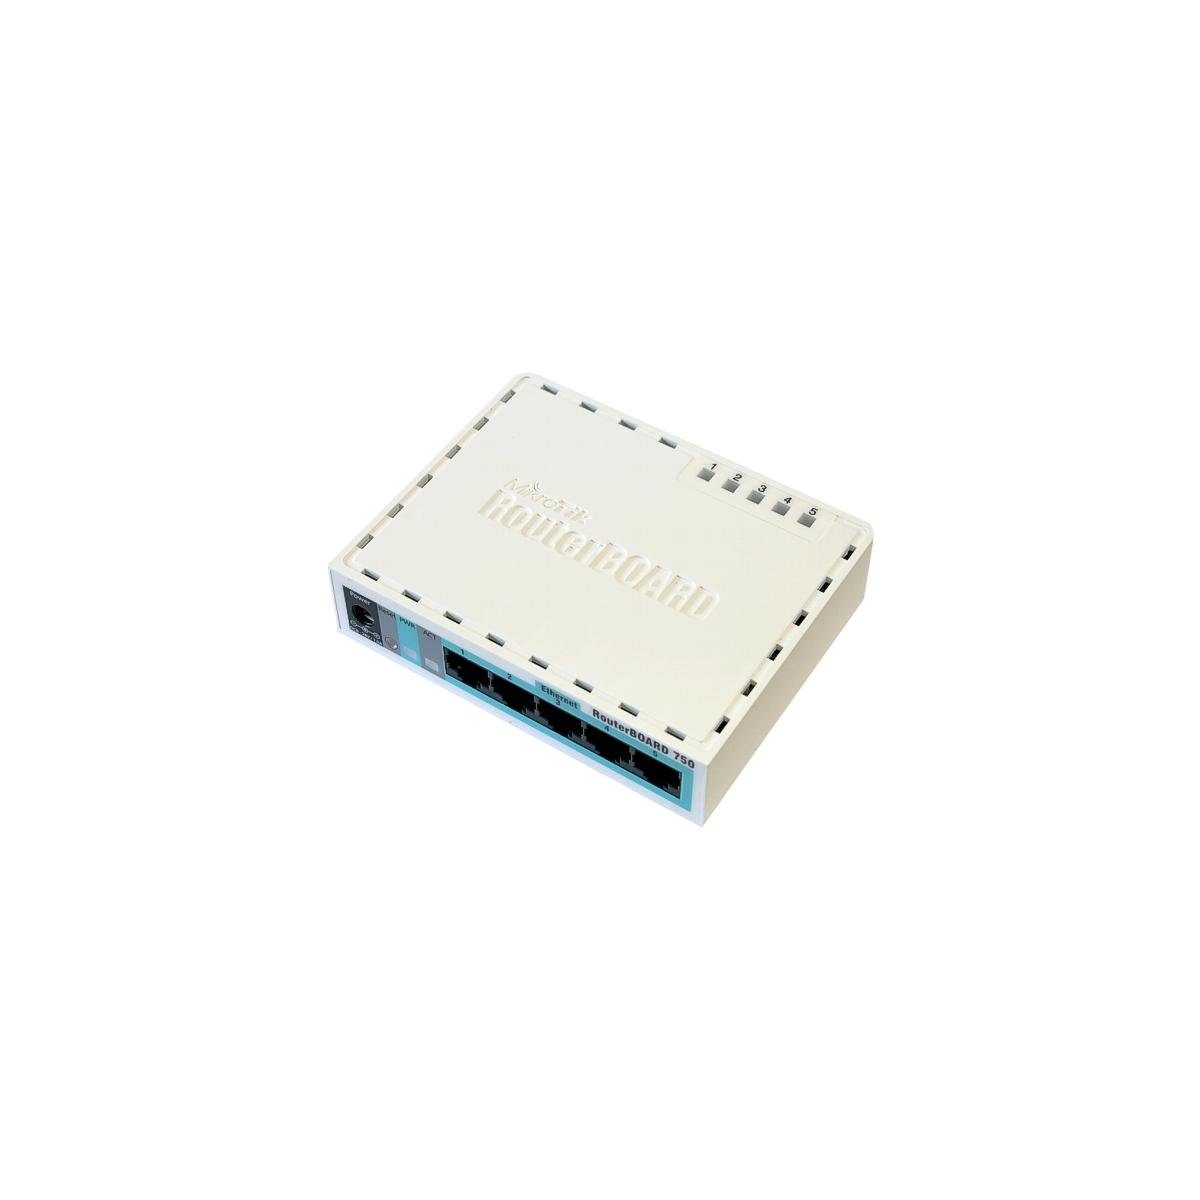 MikroTik RB750R2 - RouterBOARD hEX lite, 850 MHz, 64 MB RAM Netzwerk-Switch